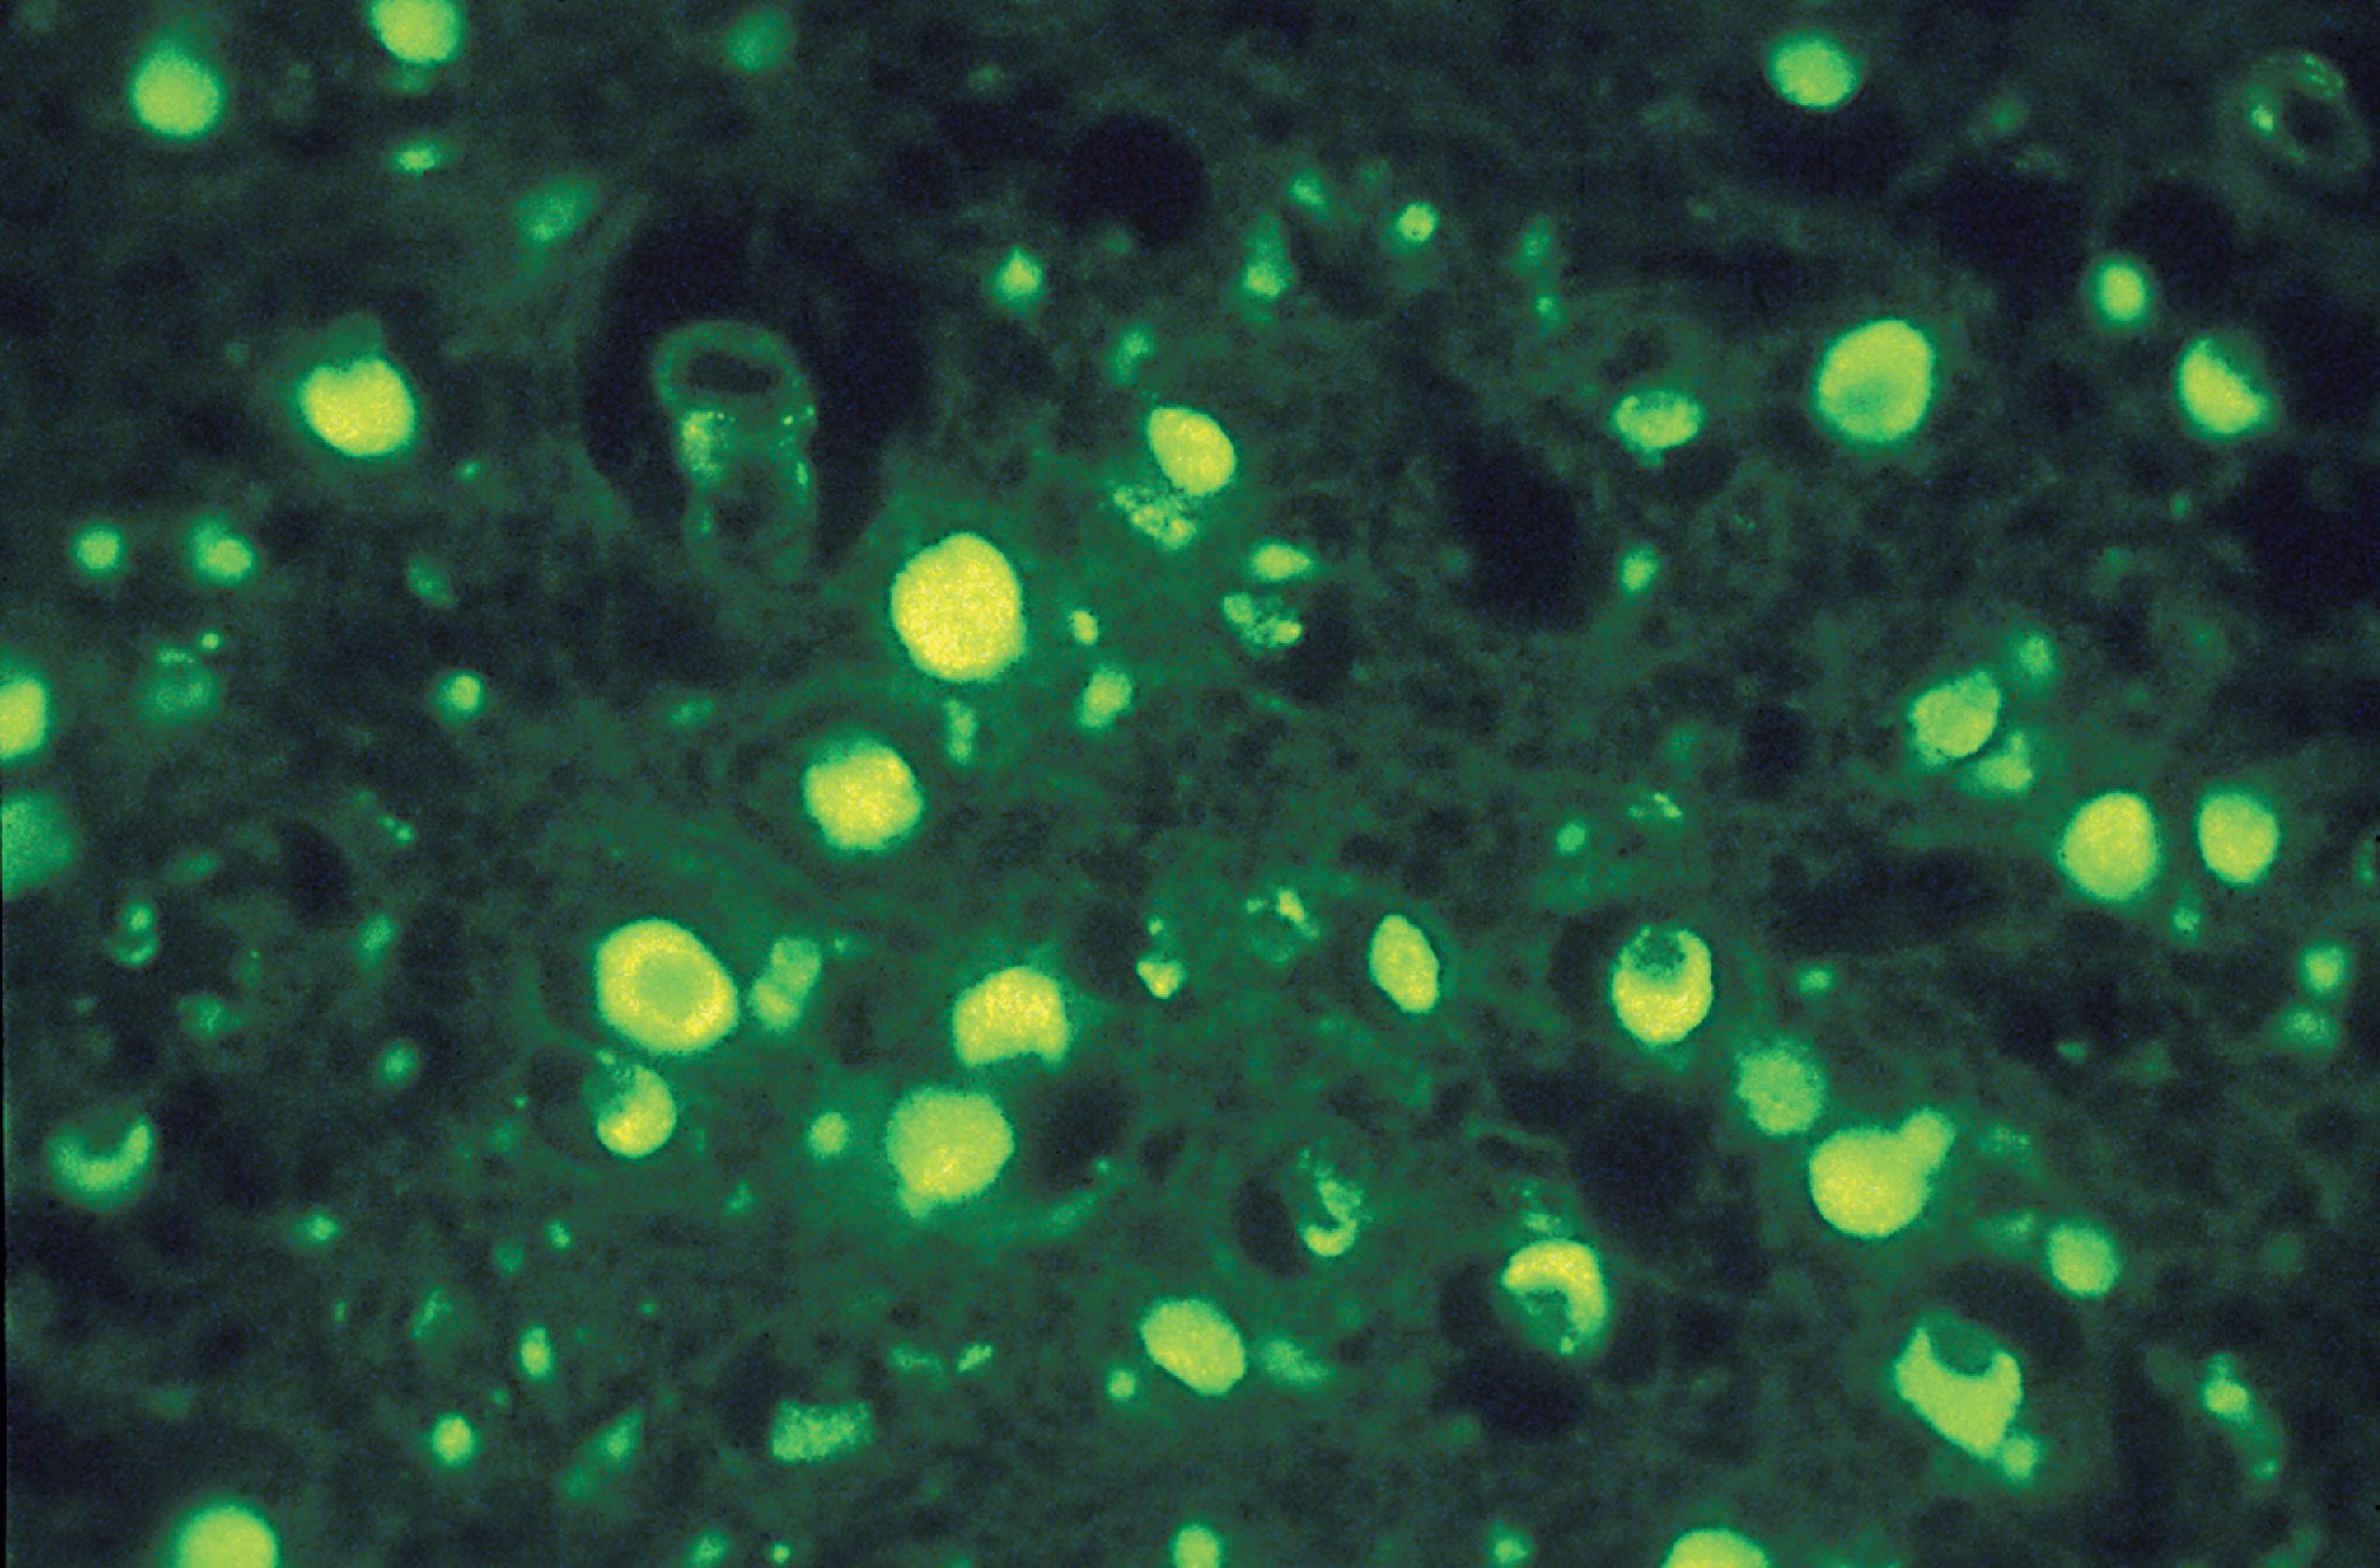 FIGure 8.13, Autofluorescent products in neuronal ceroid lipofuscinosis.